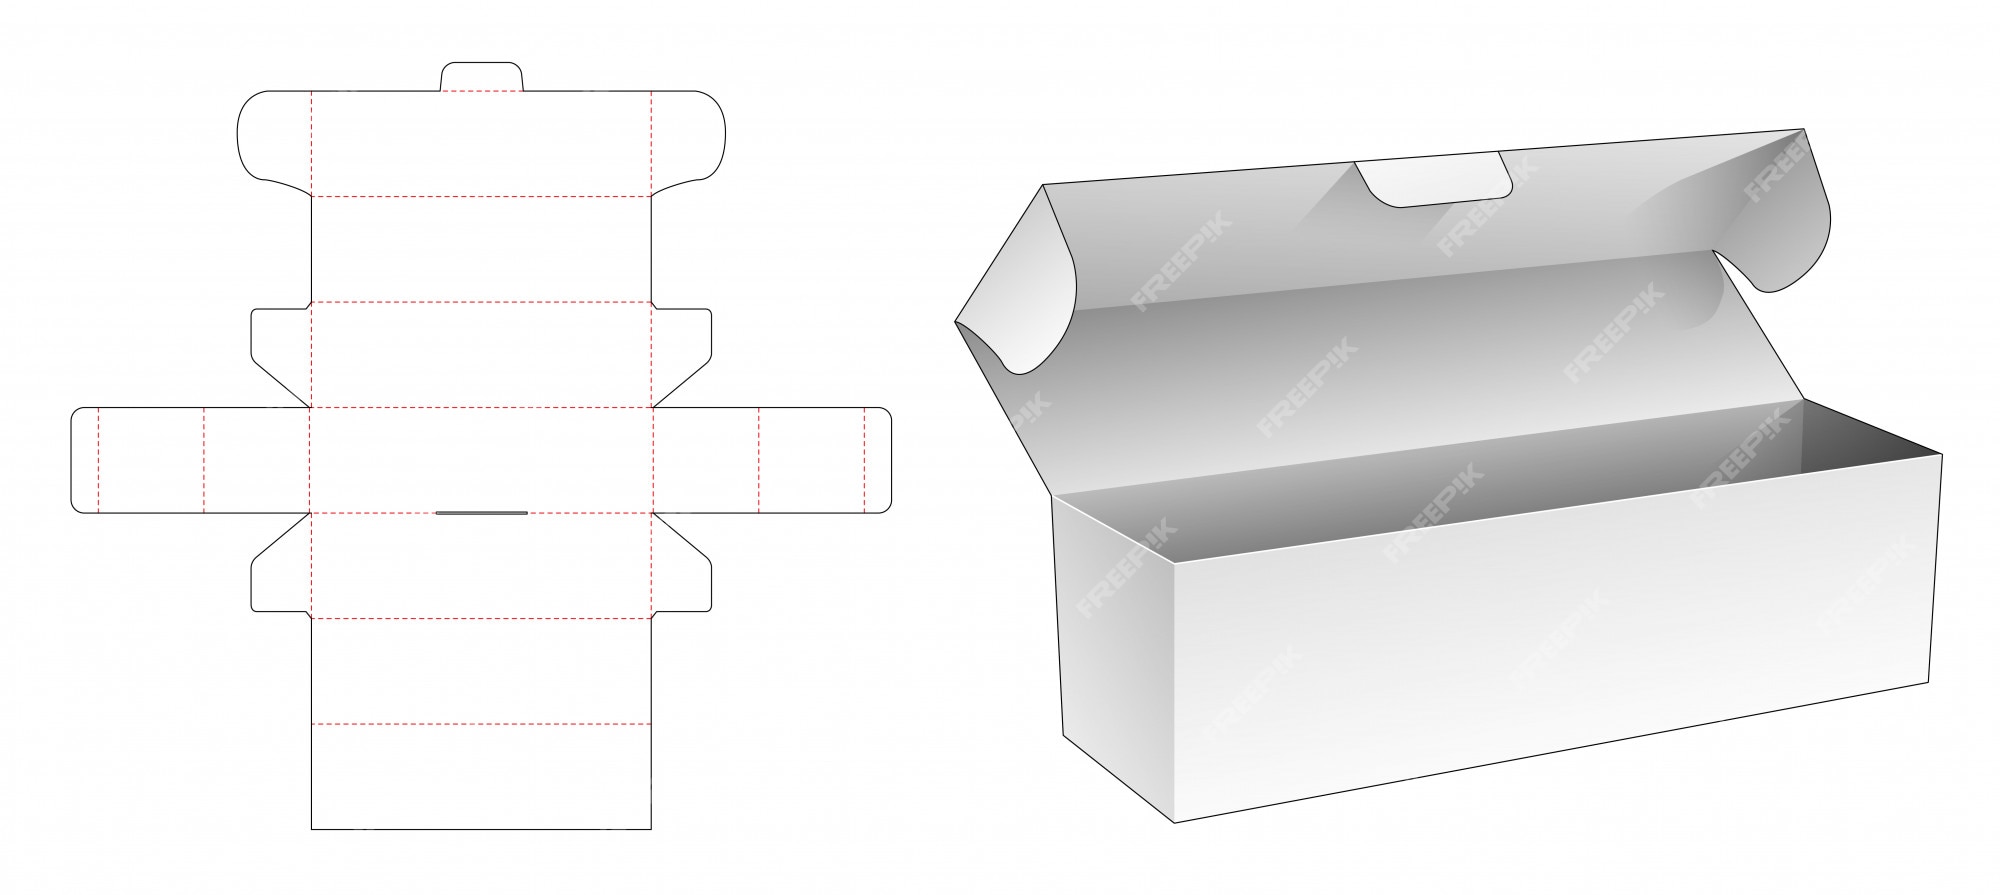 Premium Vector | Bakery long box die cut template design